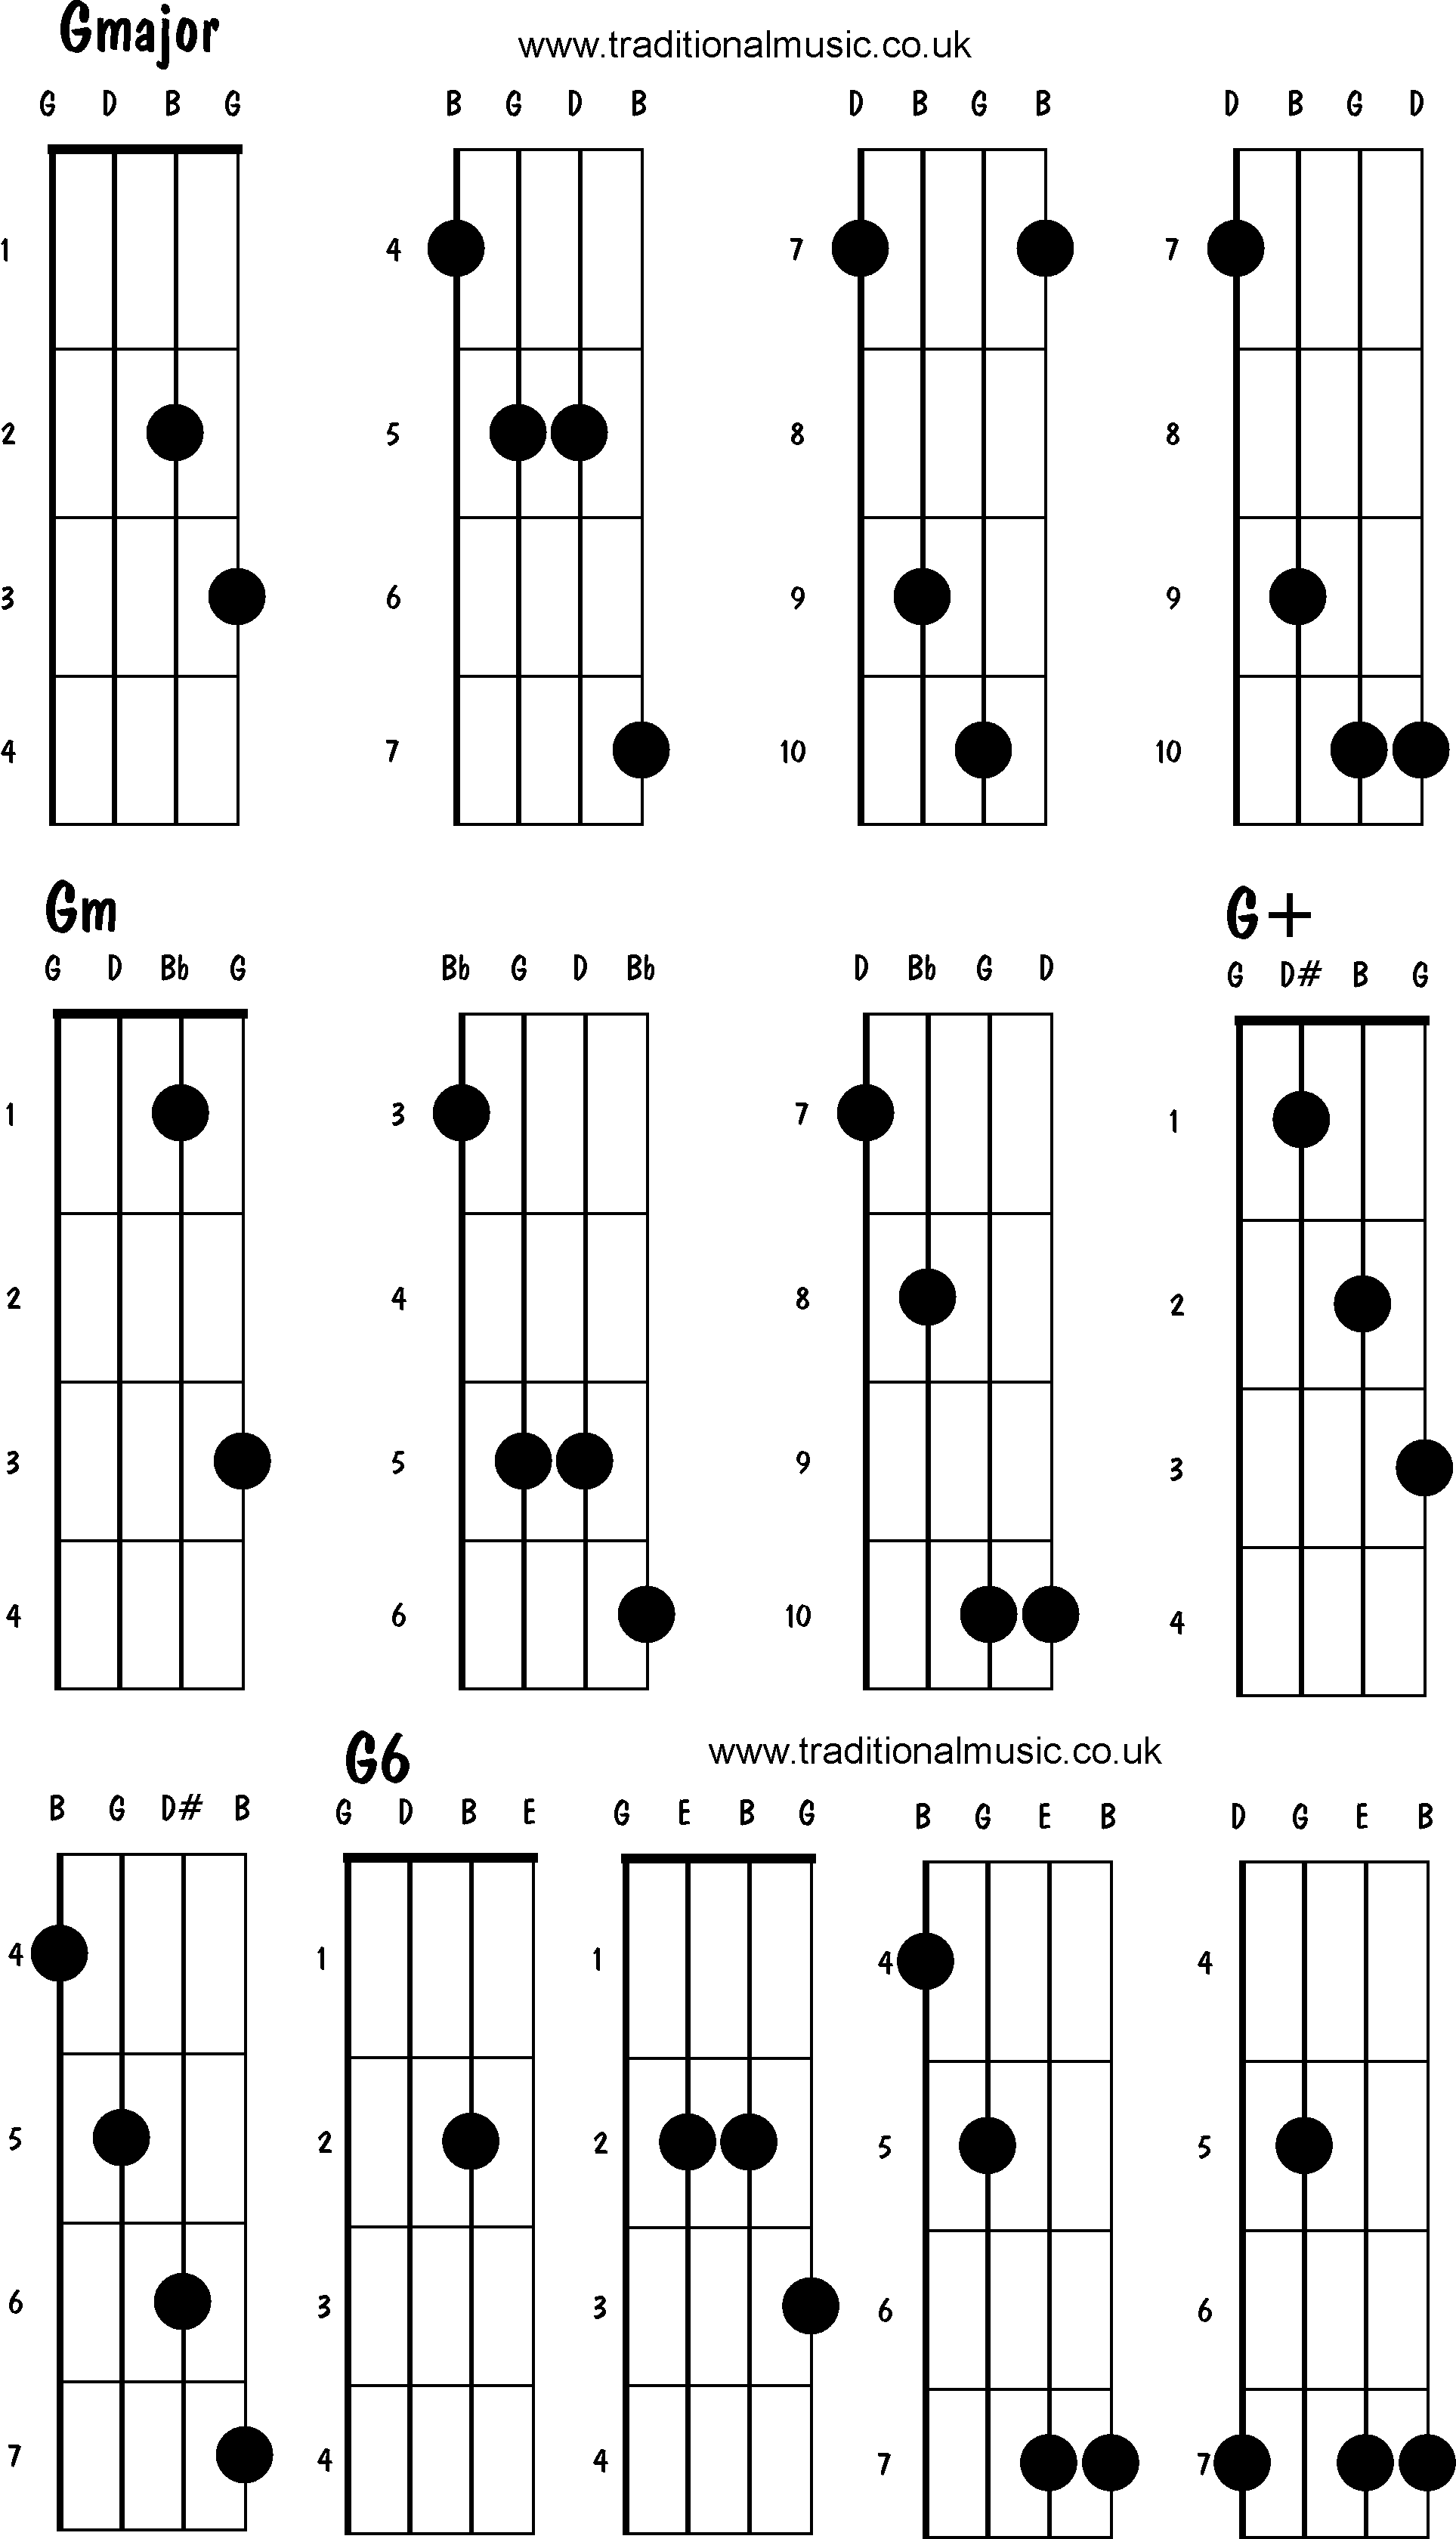 Advanced mandolin chords: Gmajor, Gm, G+, G6